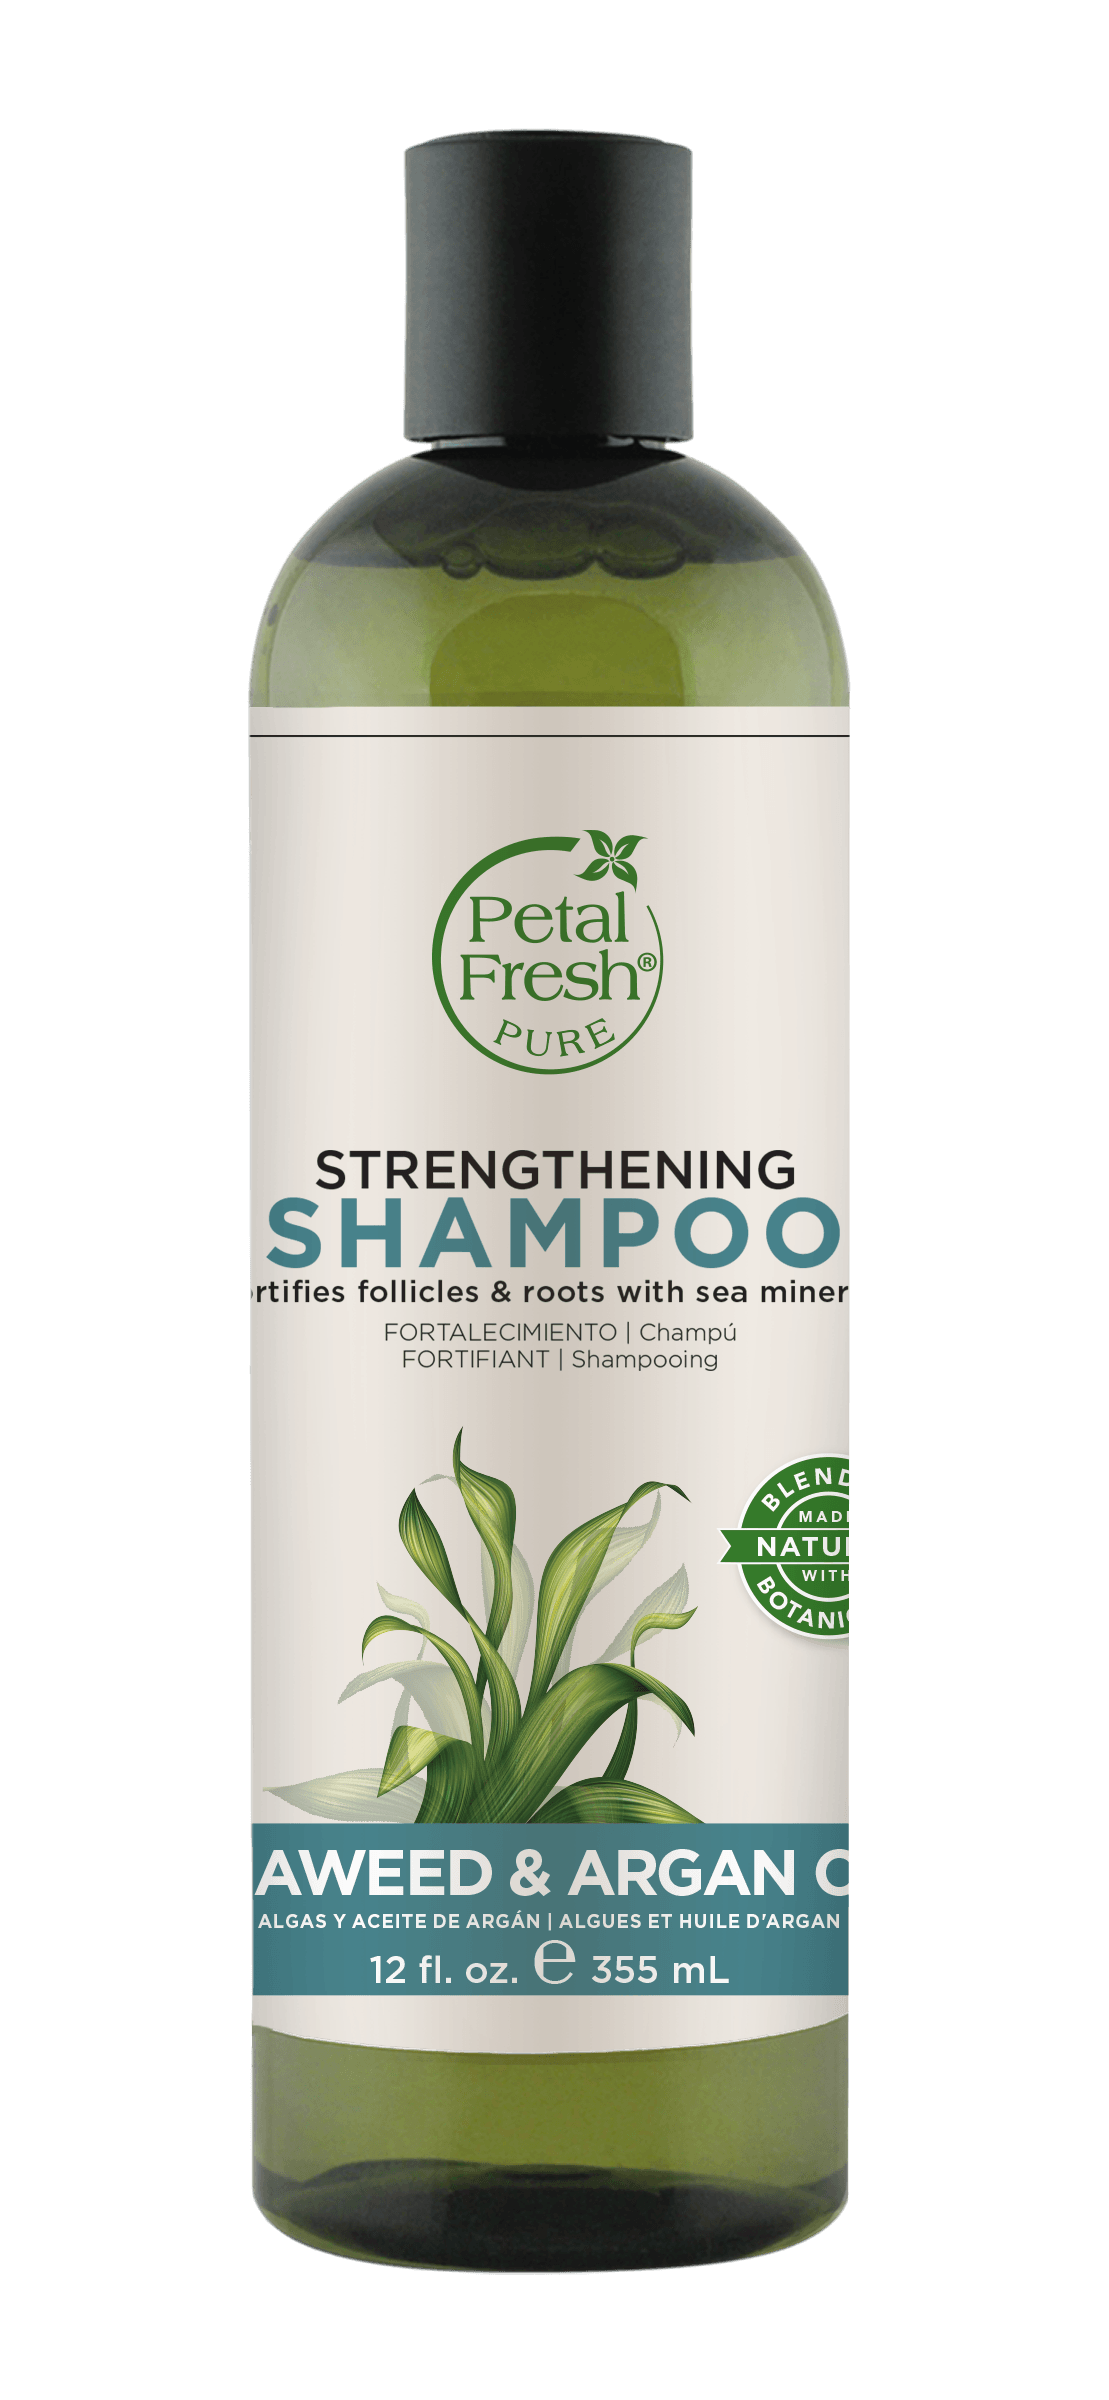 petal fresh szampon seaweed and argan oil